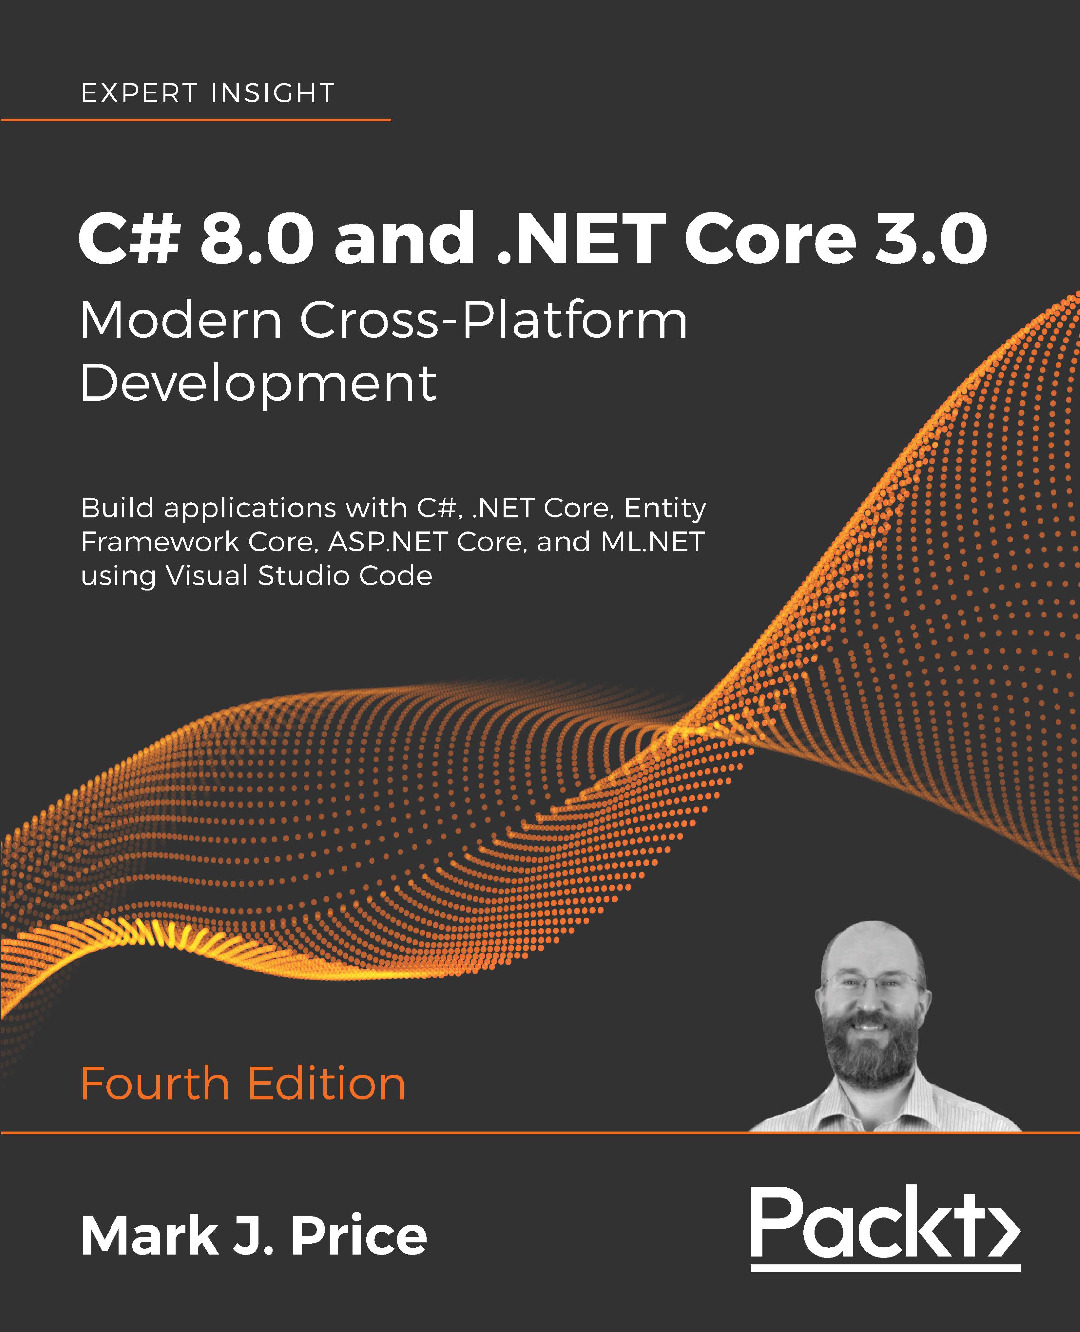 C# 8.0 and .NET Core 3.0 – Modern Cross-Platform Development 4th Edition by Mark J. Price (2019)